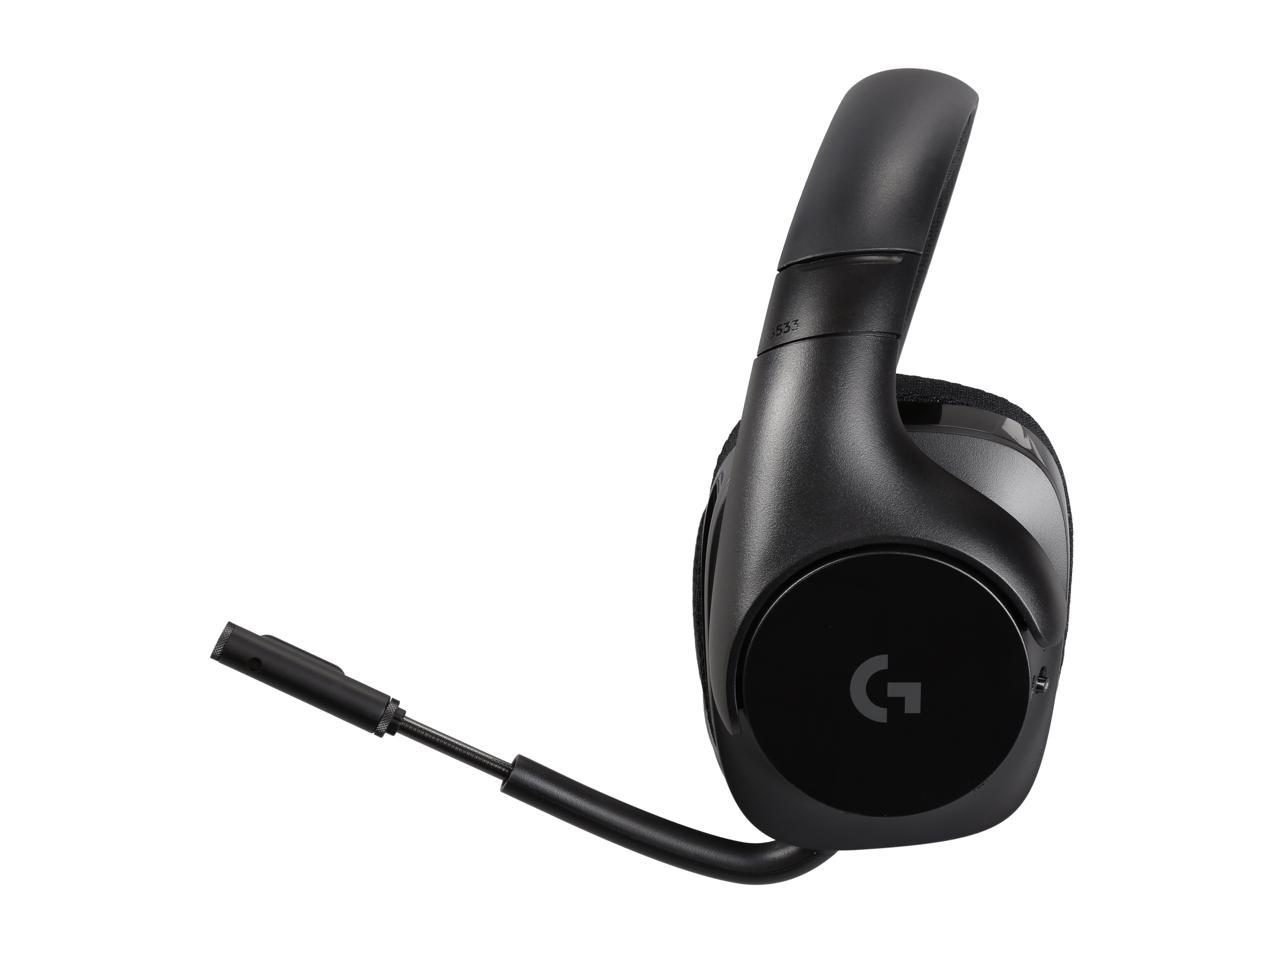 g533 logitech wireless headset